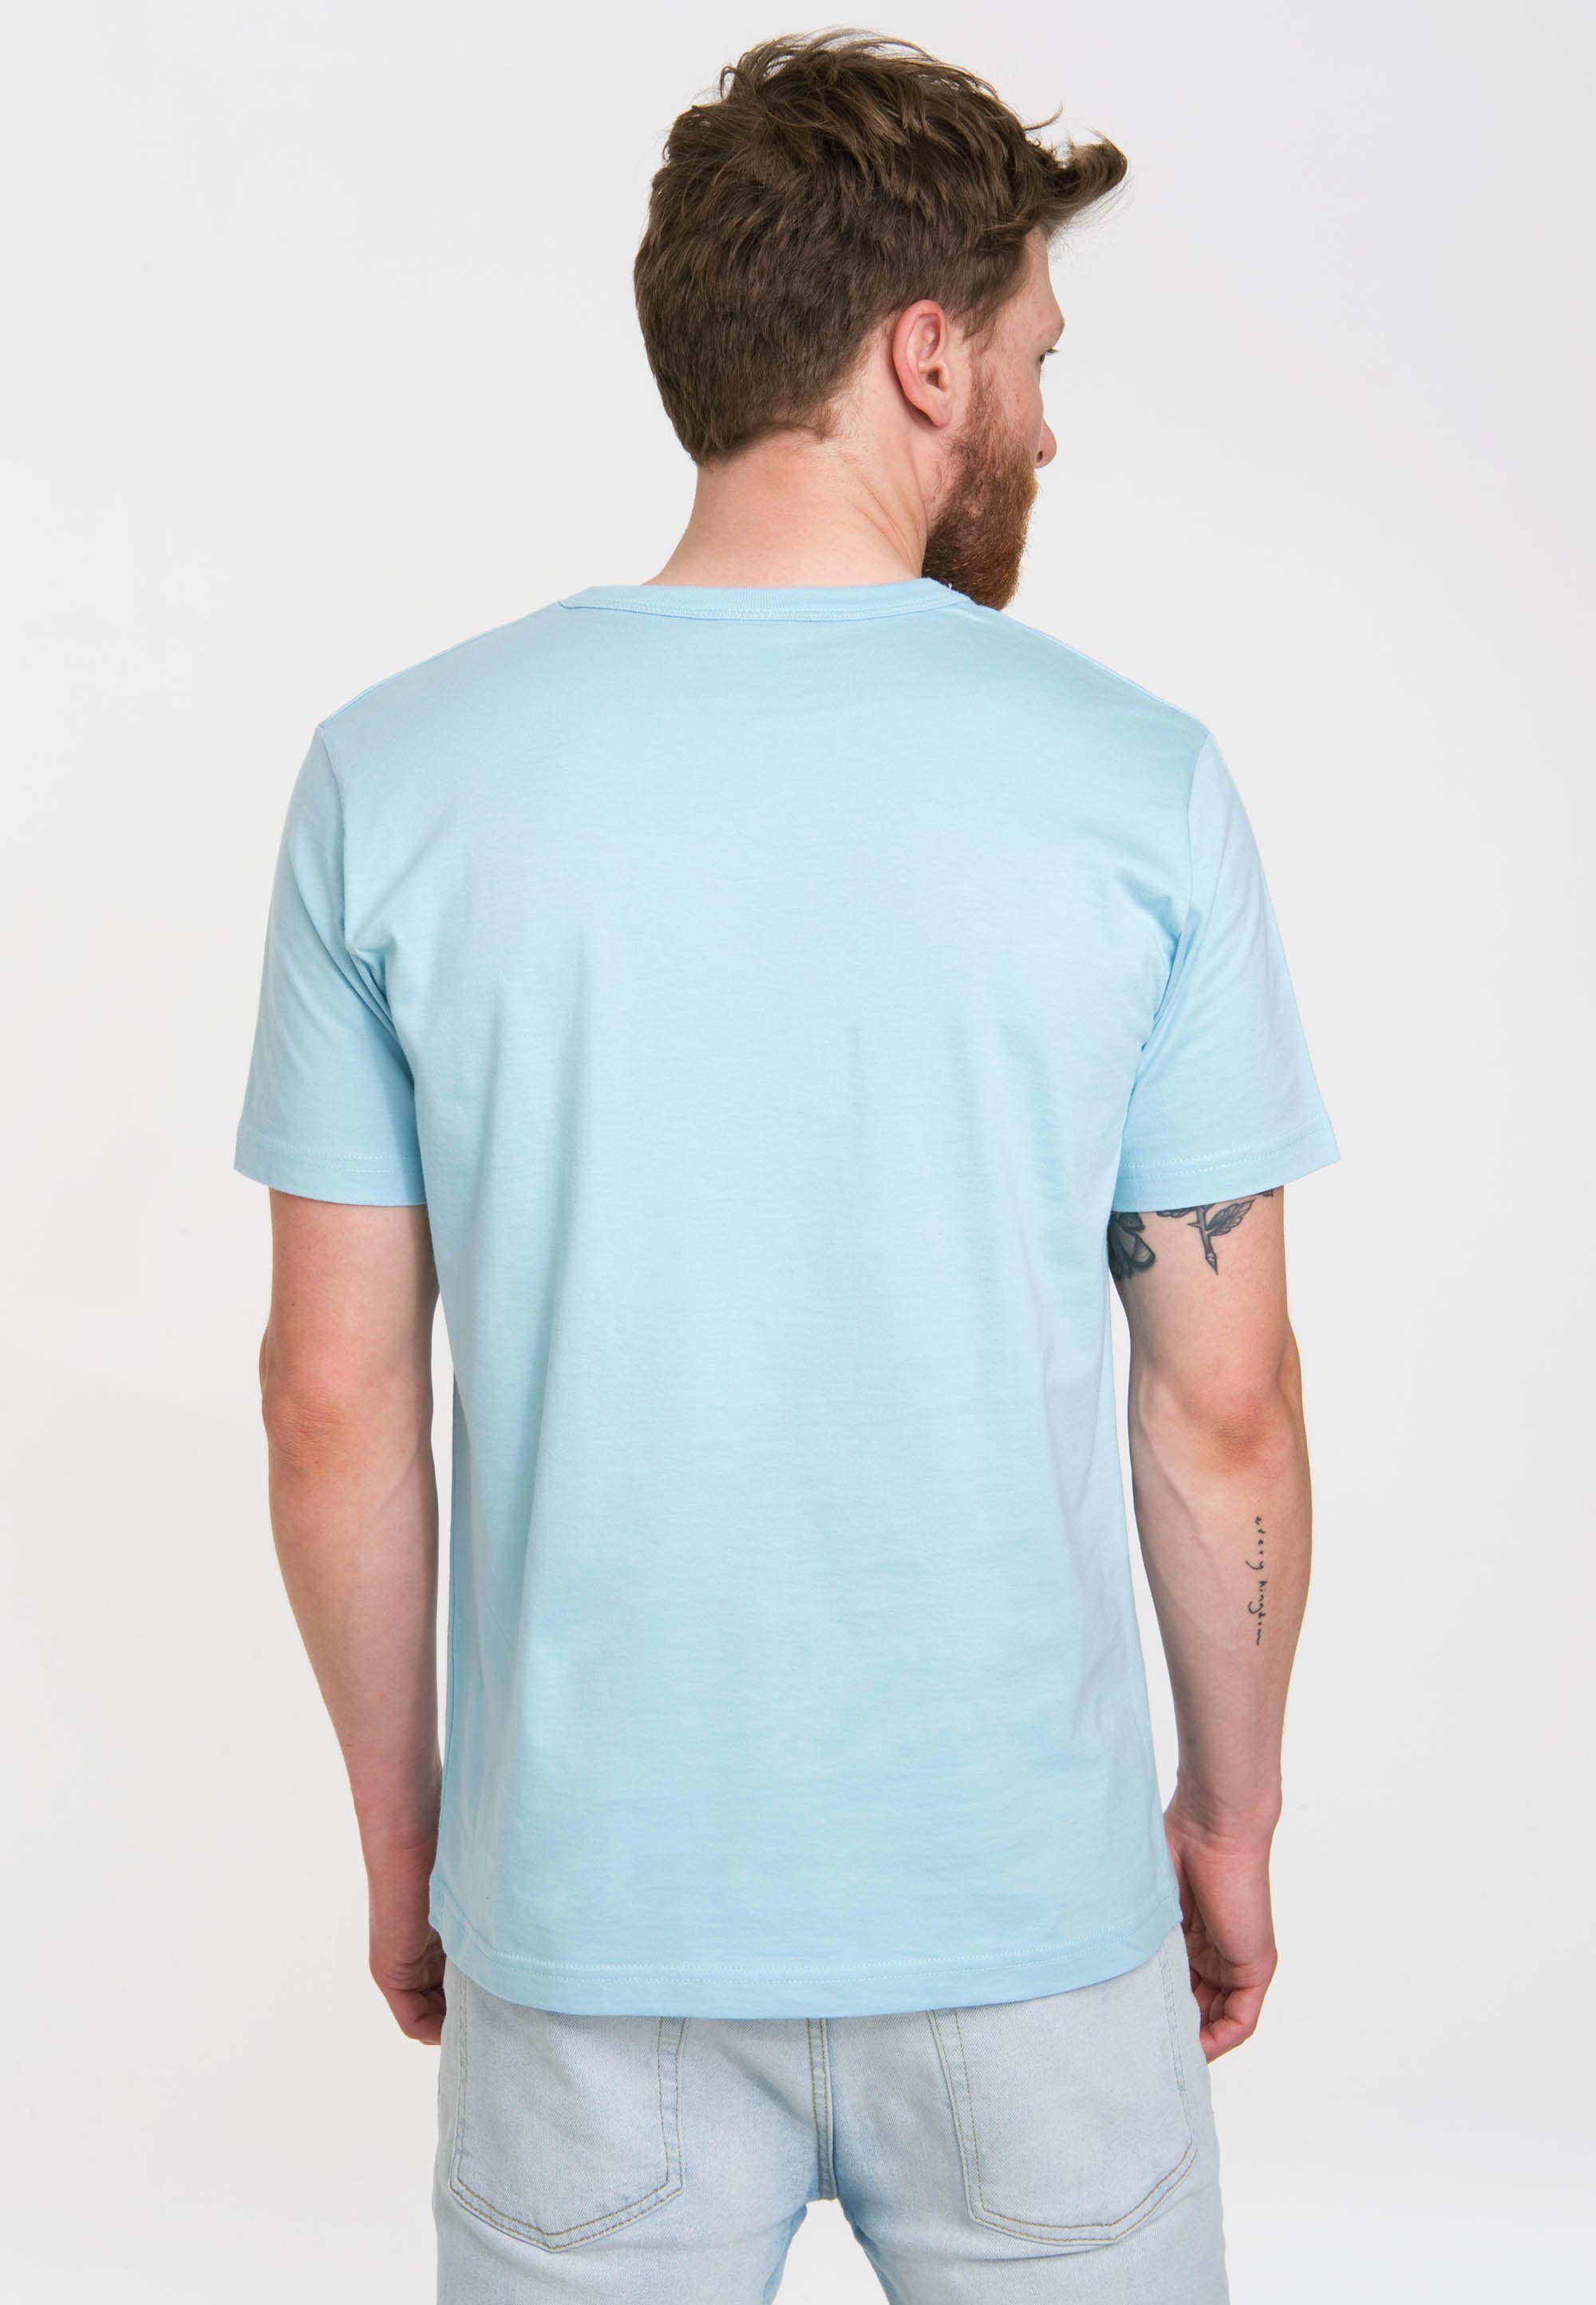 Maus-Print LOGOSHIRT hellblau mit T-Shirt